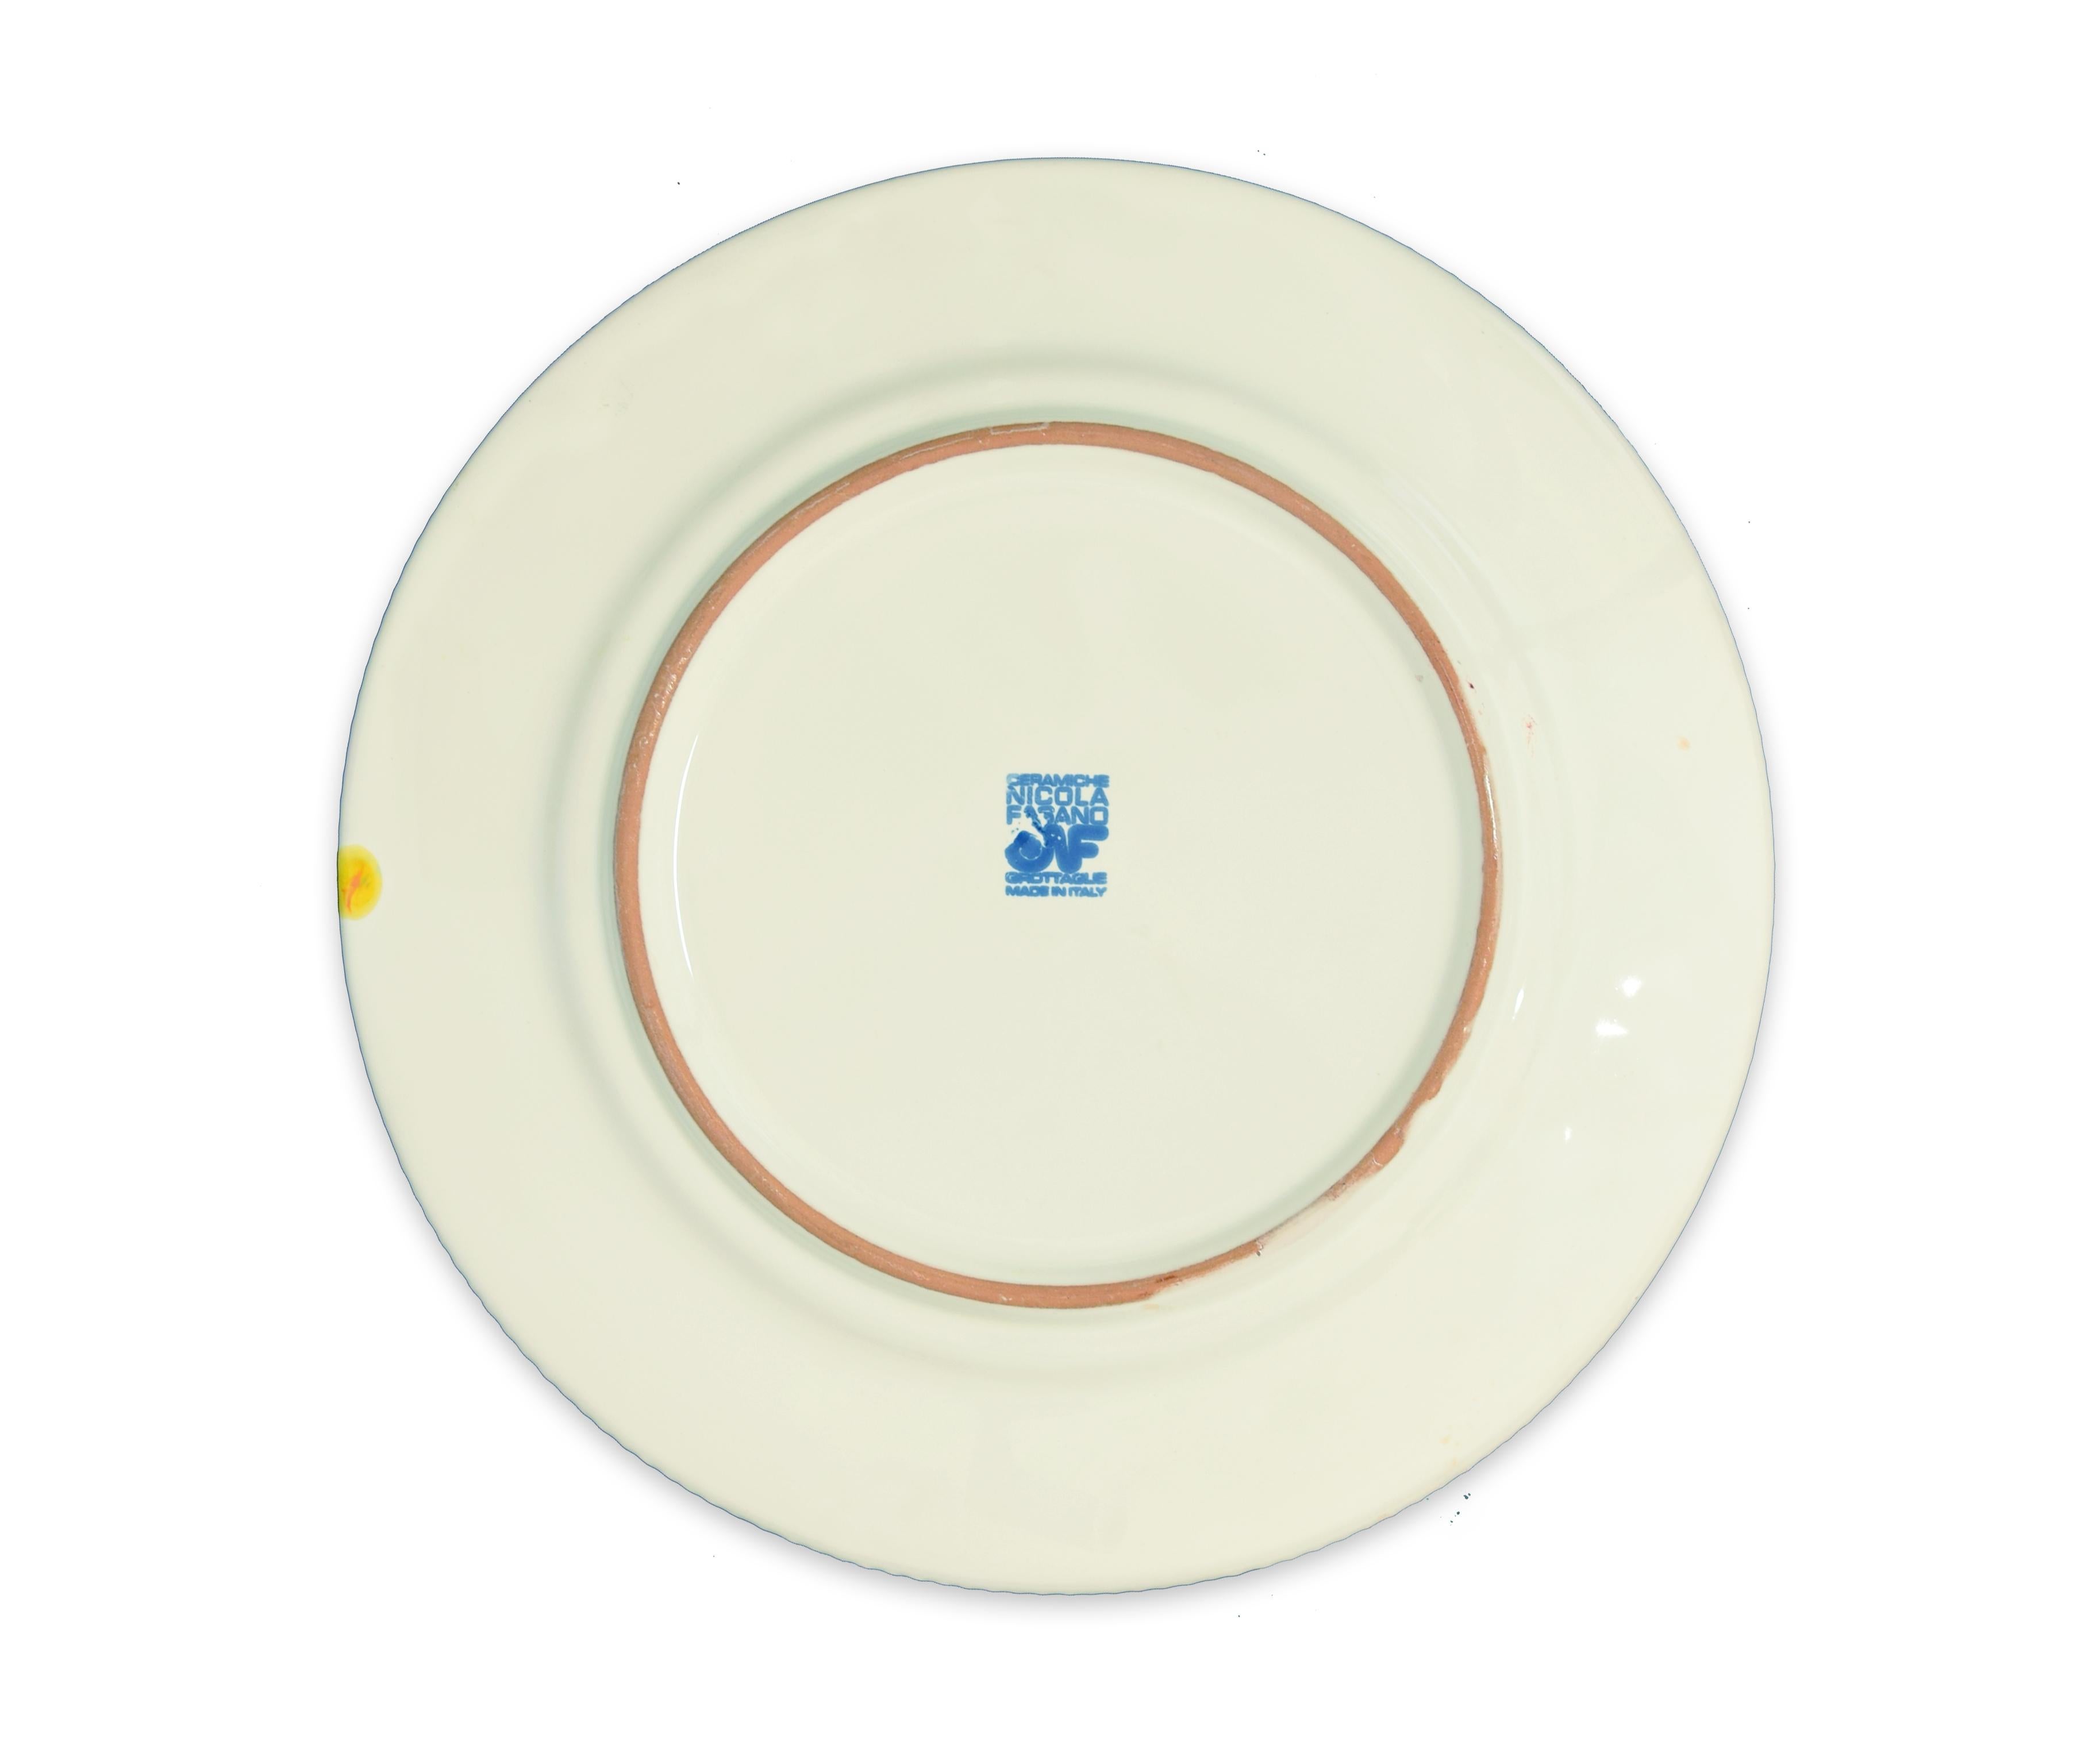 Eyes - Original  Hand-made Flat Ceramic Dish by A. Kurakina - 2019 - Contemporary Art by Anastasia Kurakina